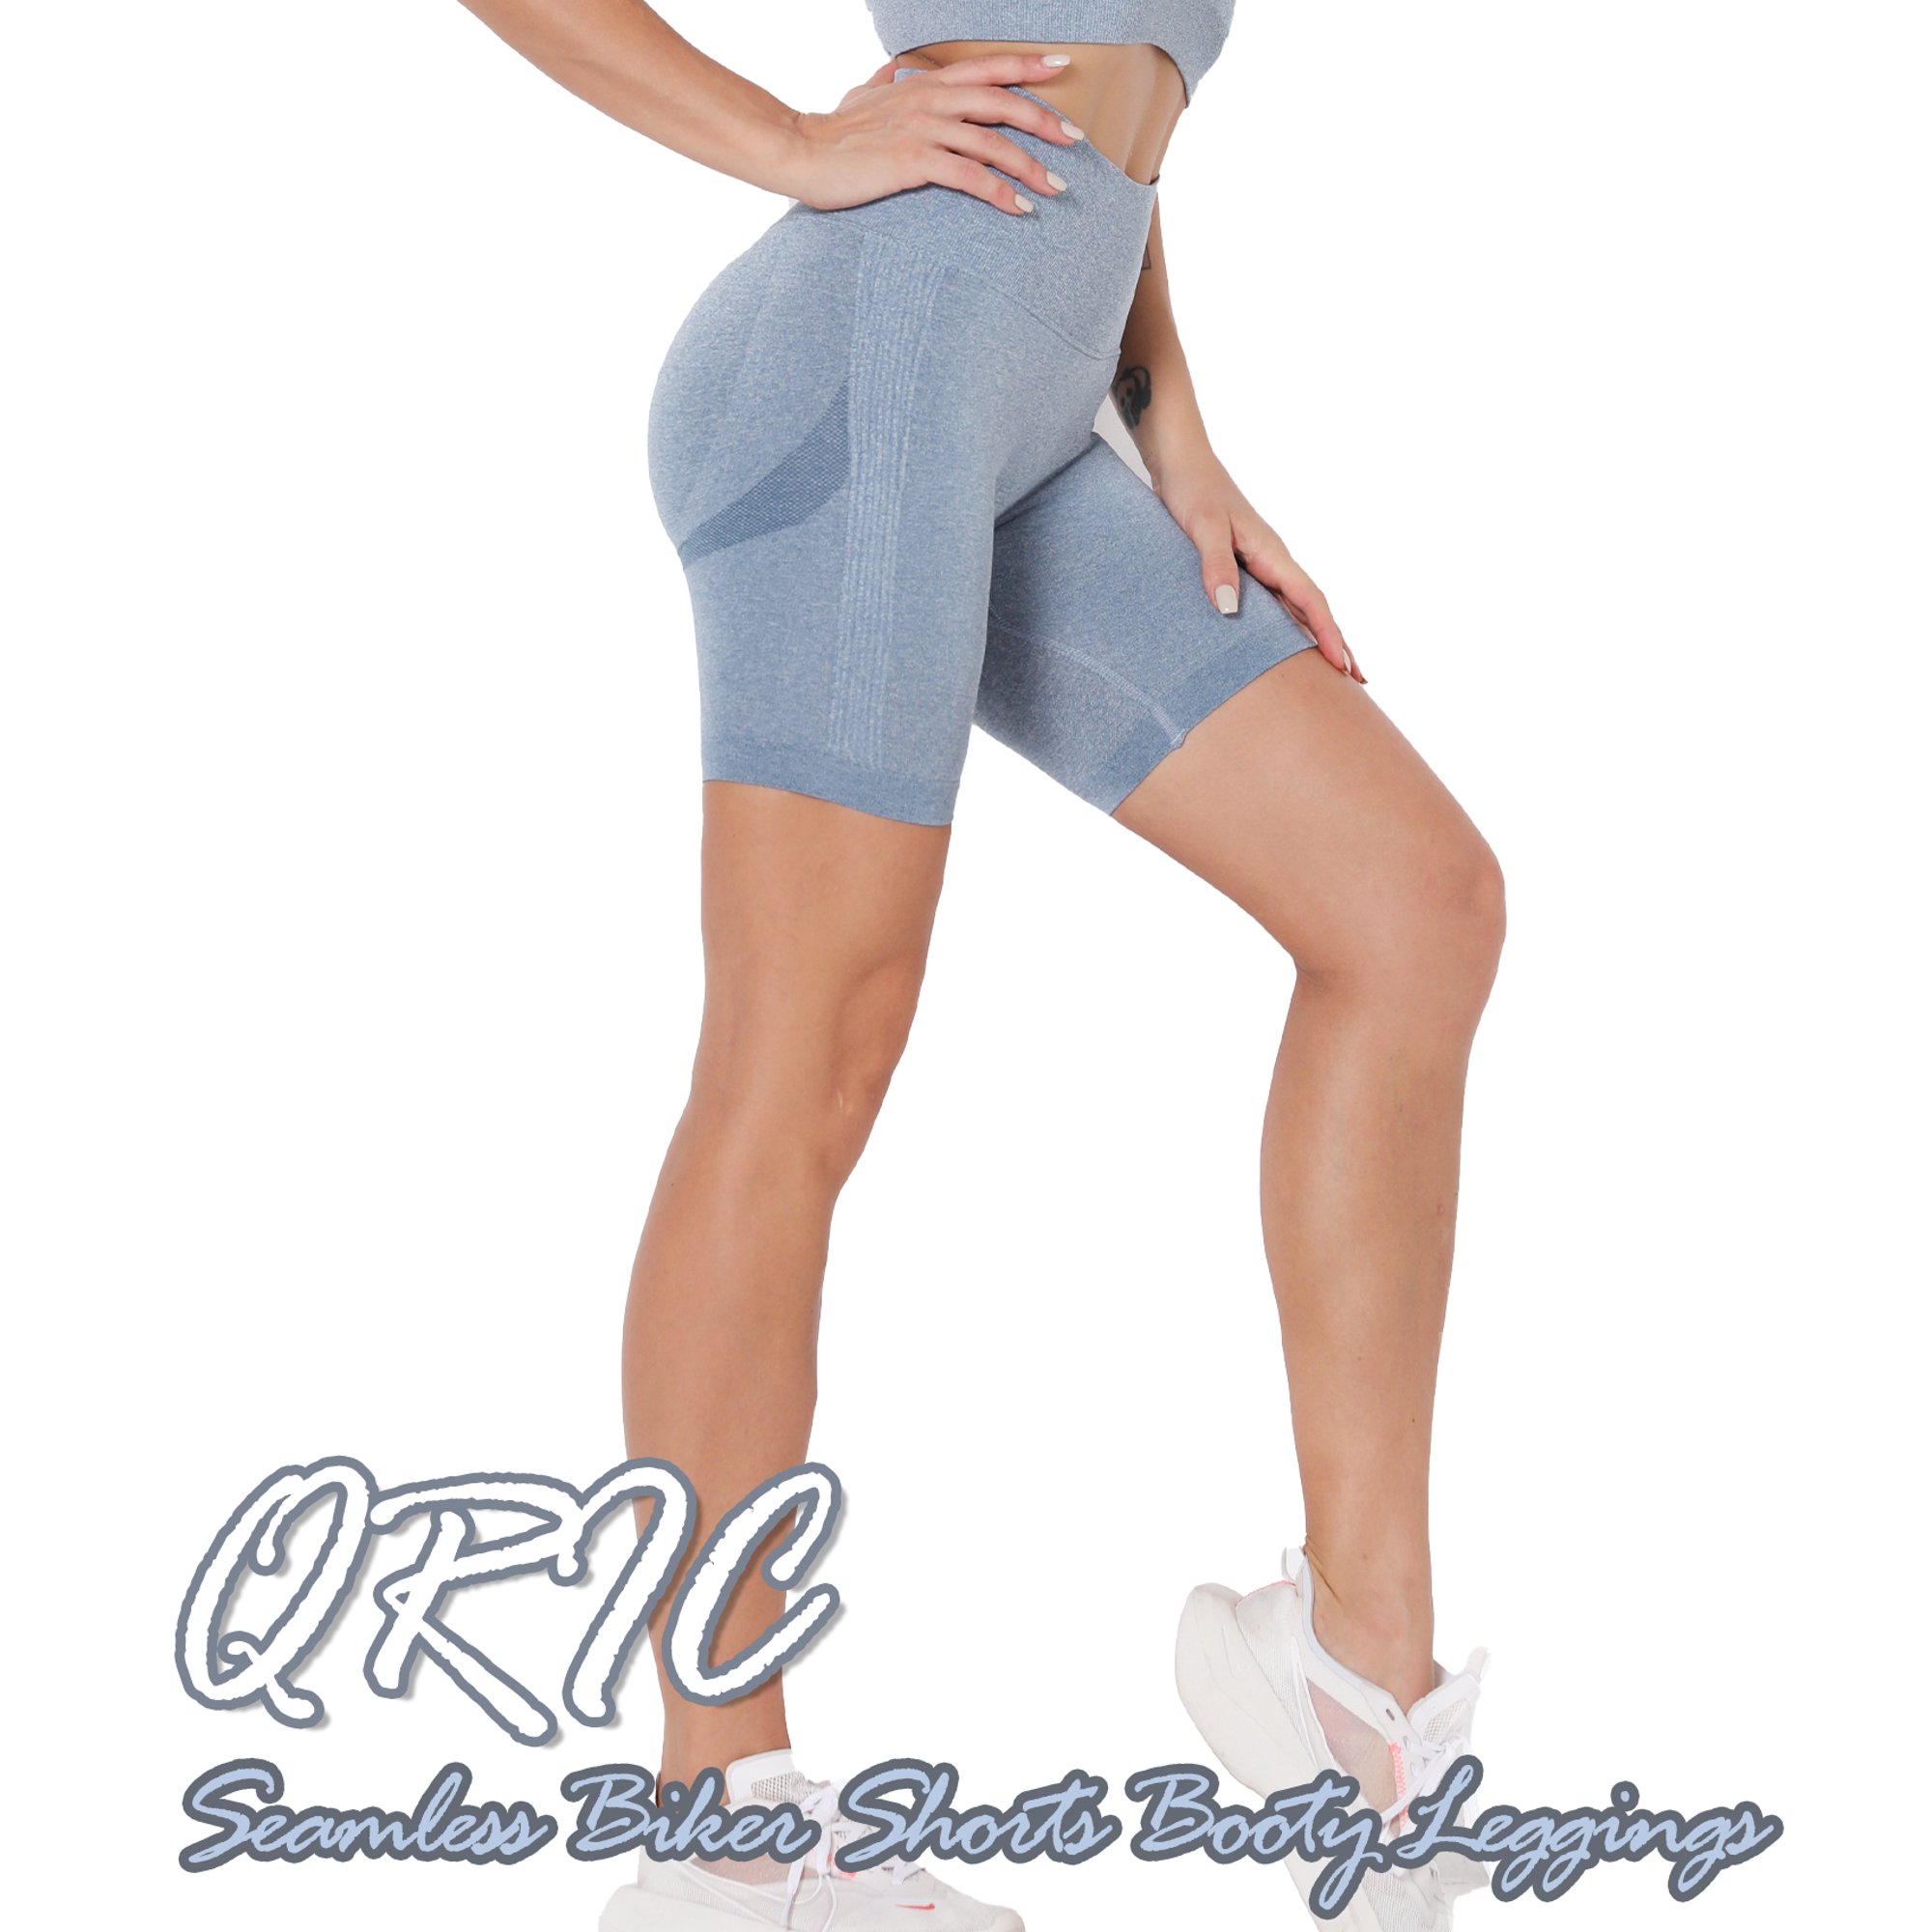 QRIC High Waisted Seamless Biker Shorts for Women Tummy Control Leggings  Butt Lifting Streamline Contour Gym Workout Yoga Shorts, Blue